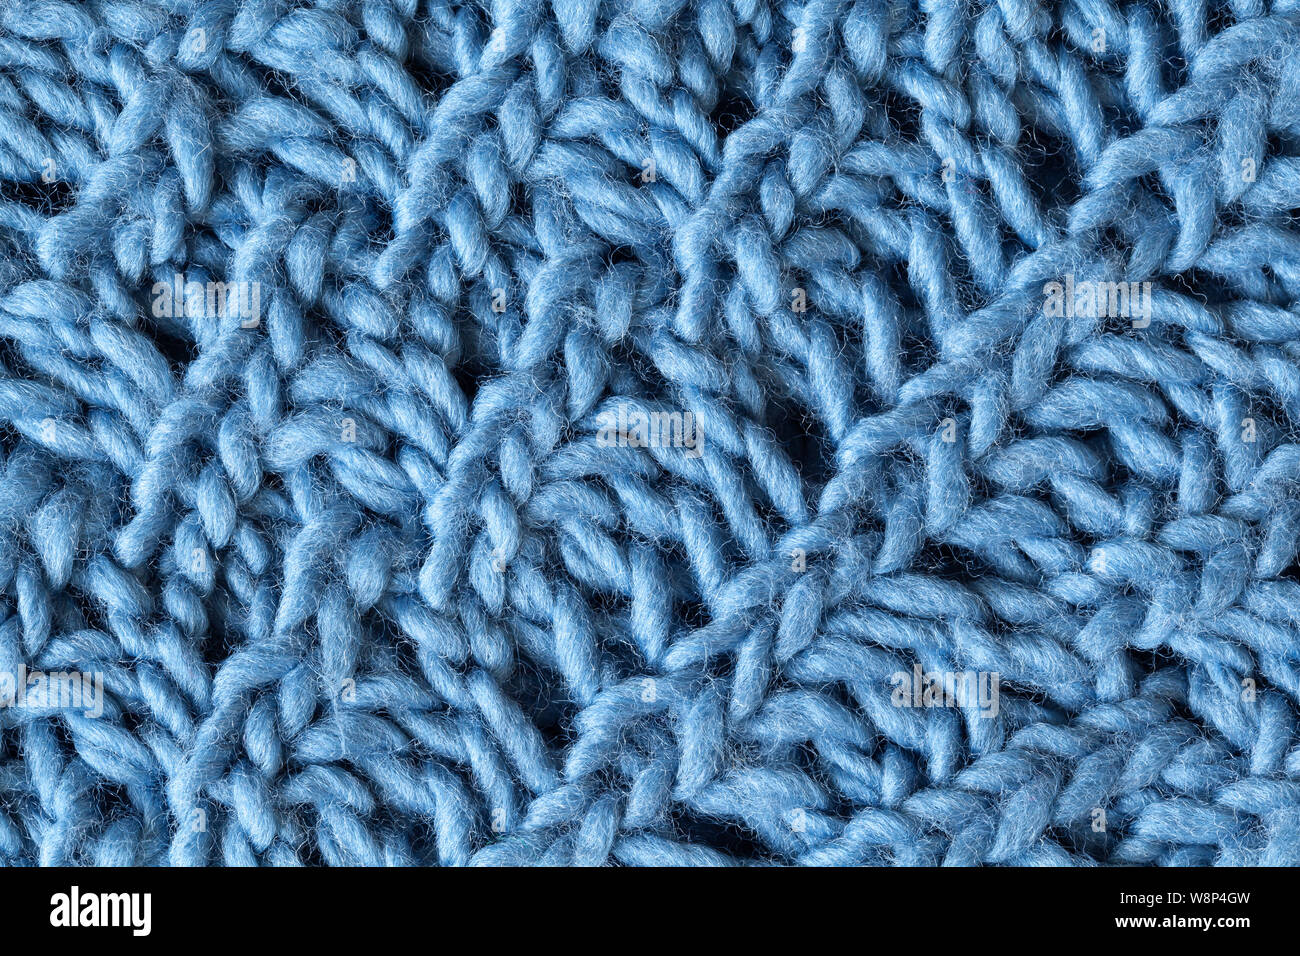 Knitted woolen textured surface, macro. Soft grey blue merino wool pattern backdrop, closeup. Autumn and winter flat lay. Scandinavian minimal style. Stock Photo